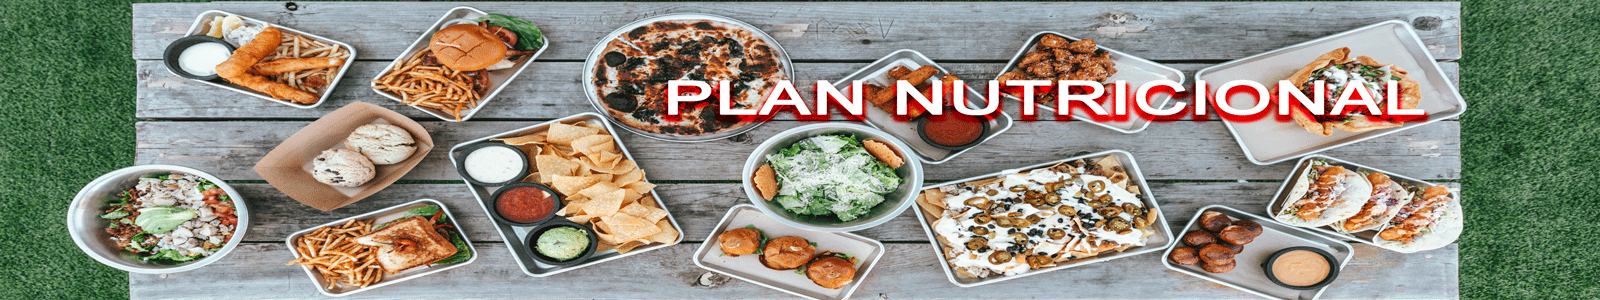 plan-nutricional-web